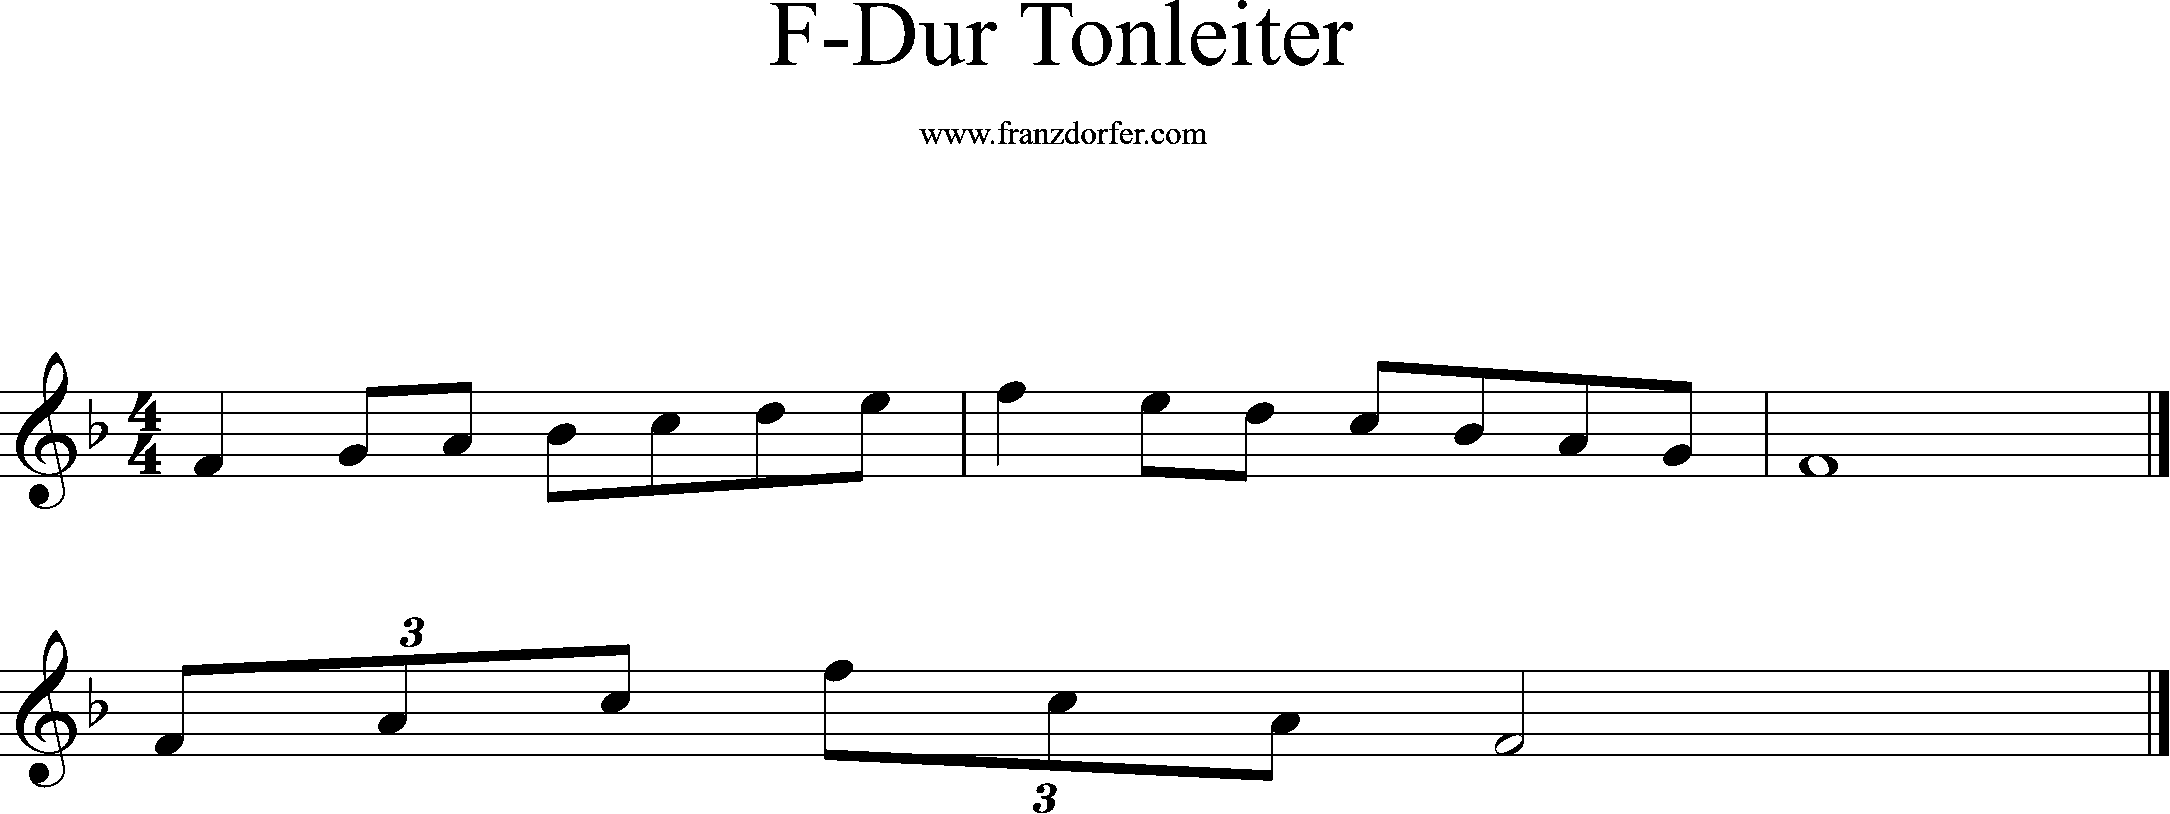 F-Dur, Tonleiter, f1-f2